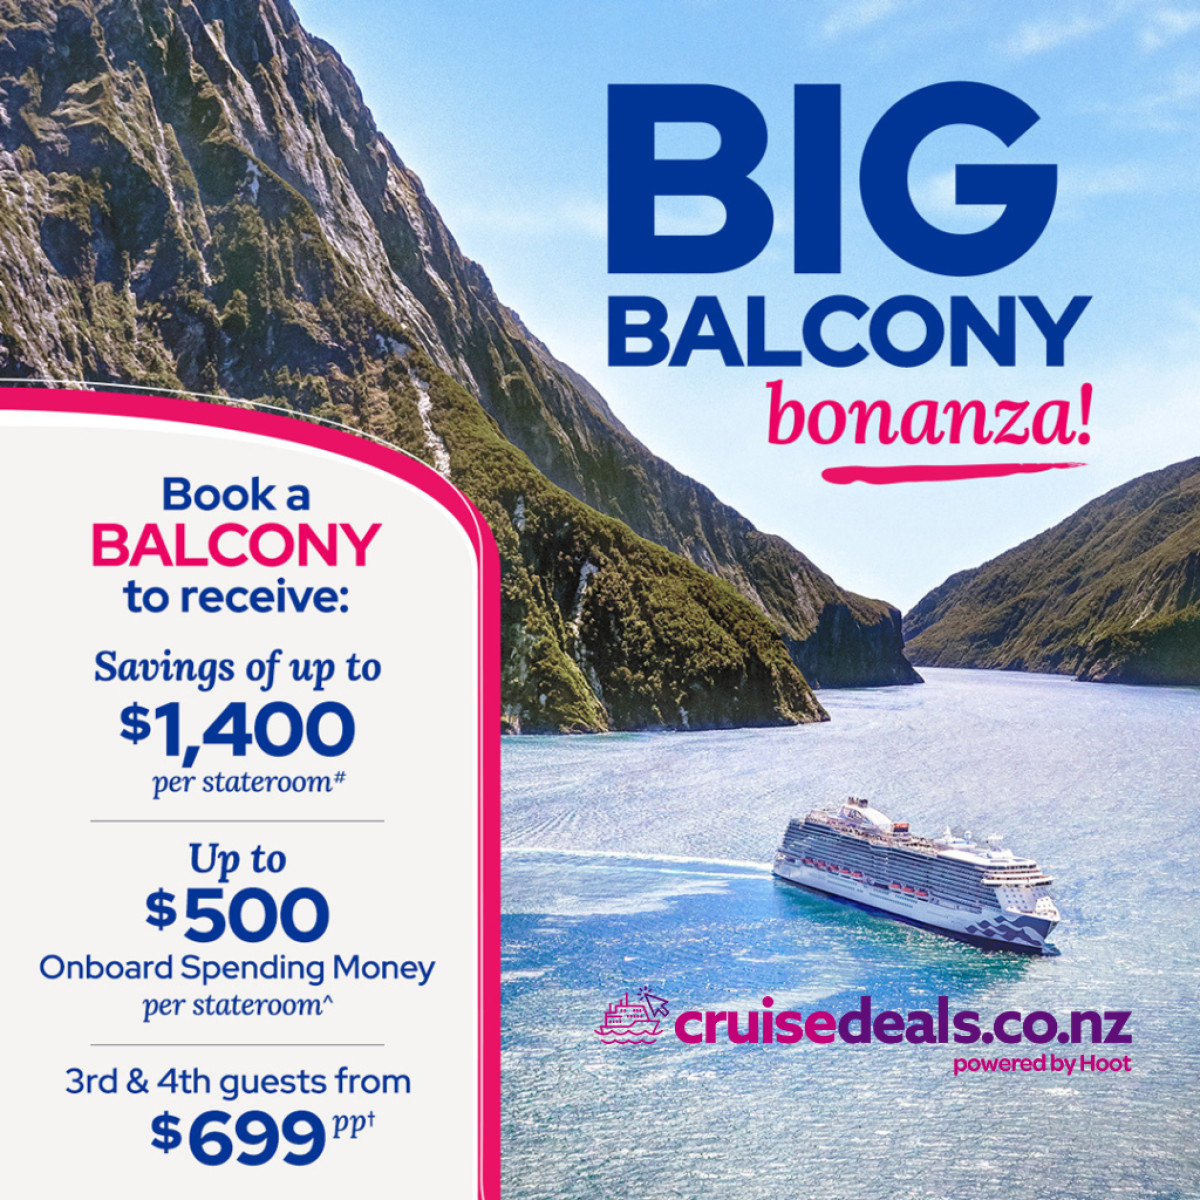 Princess Cruises Big Balcony Bonanza